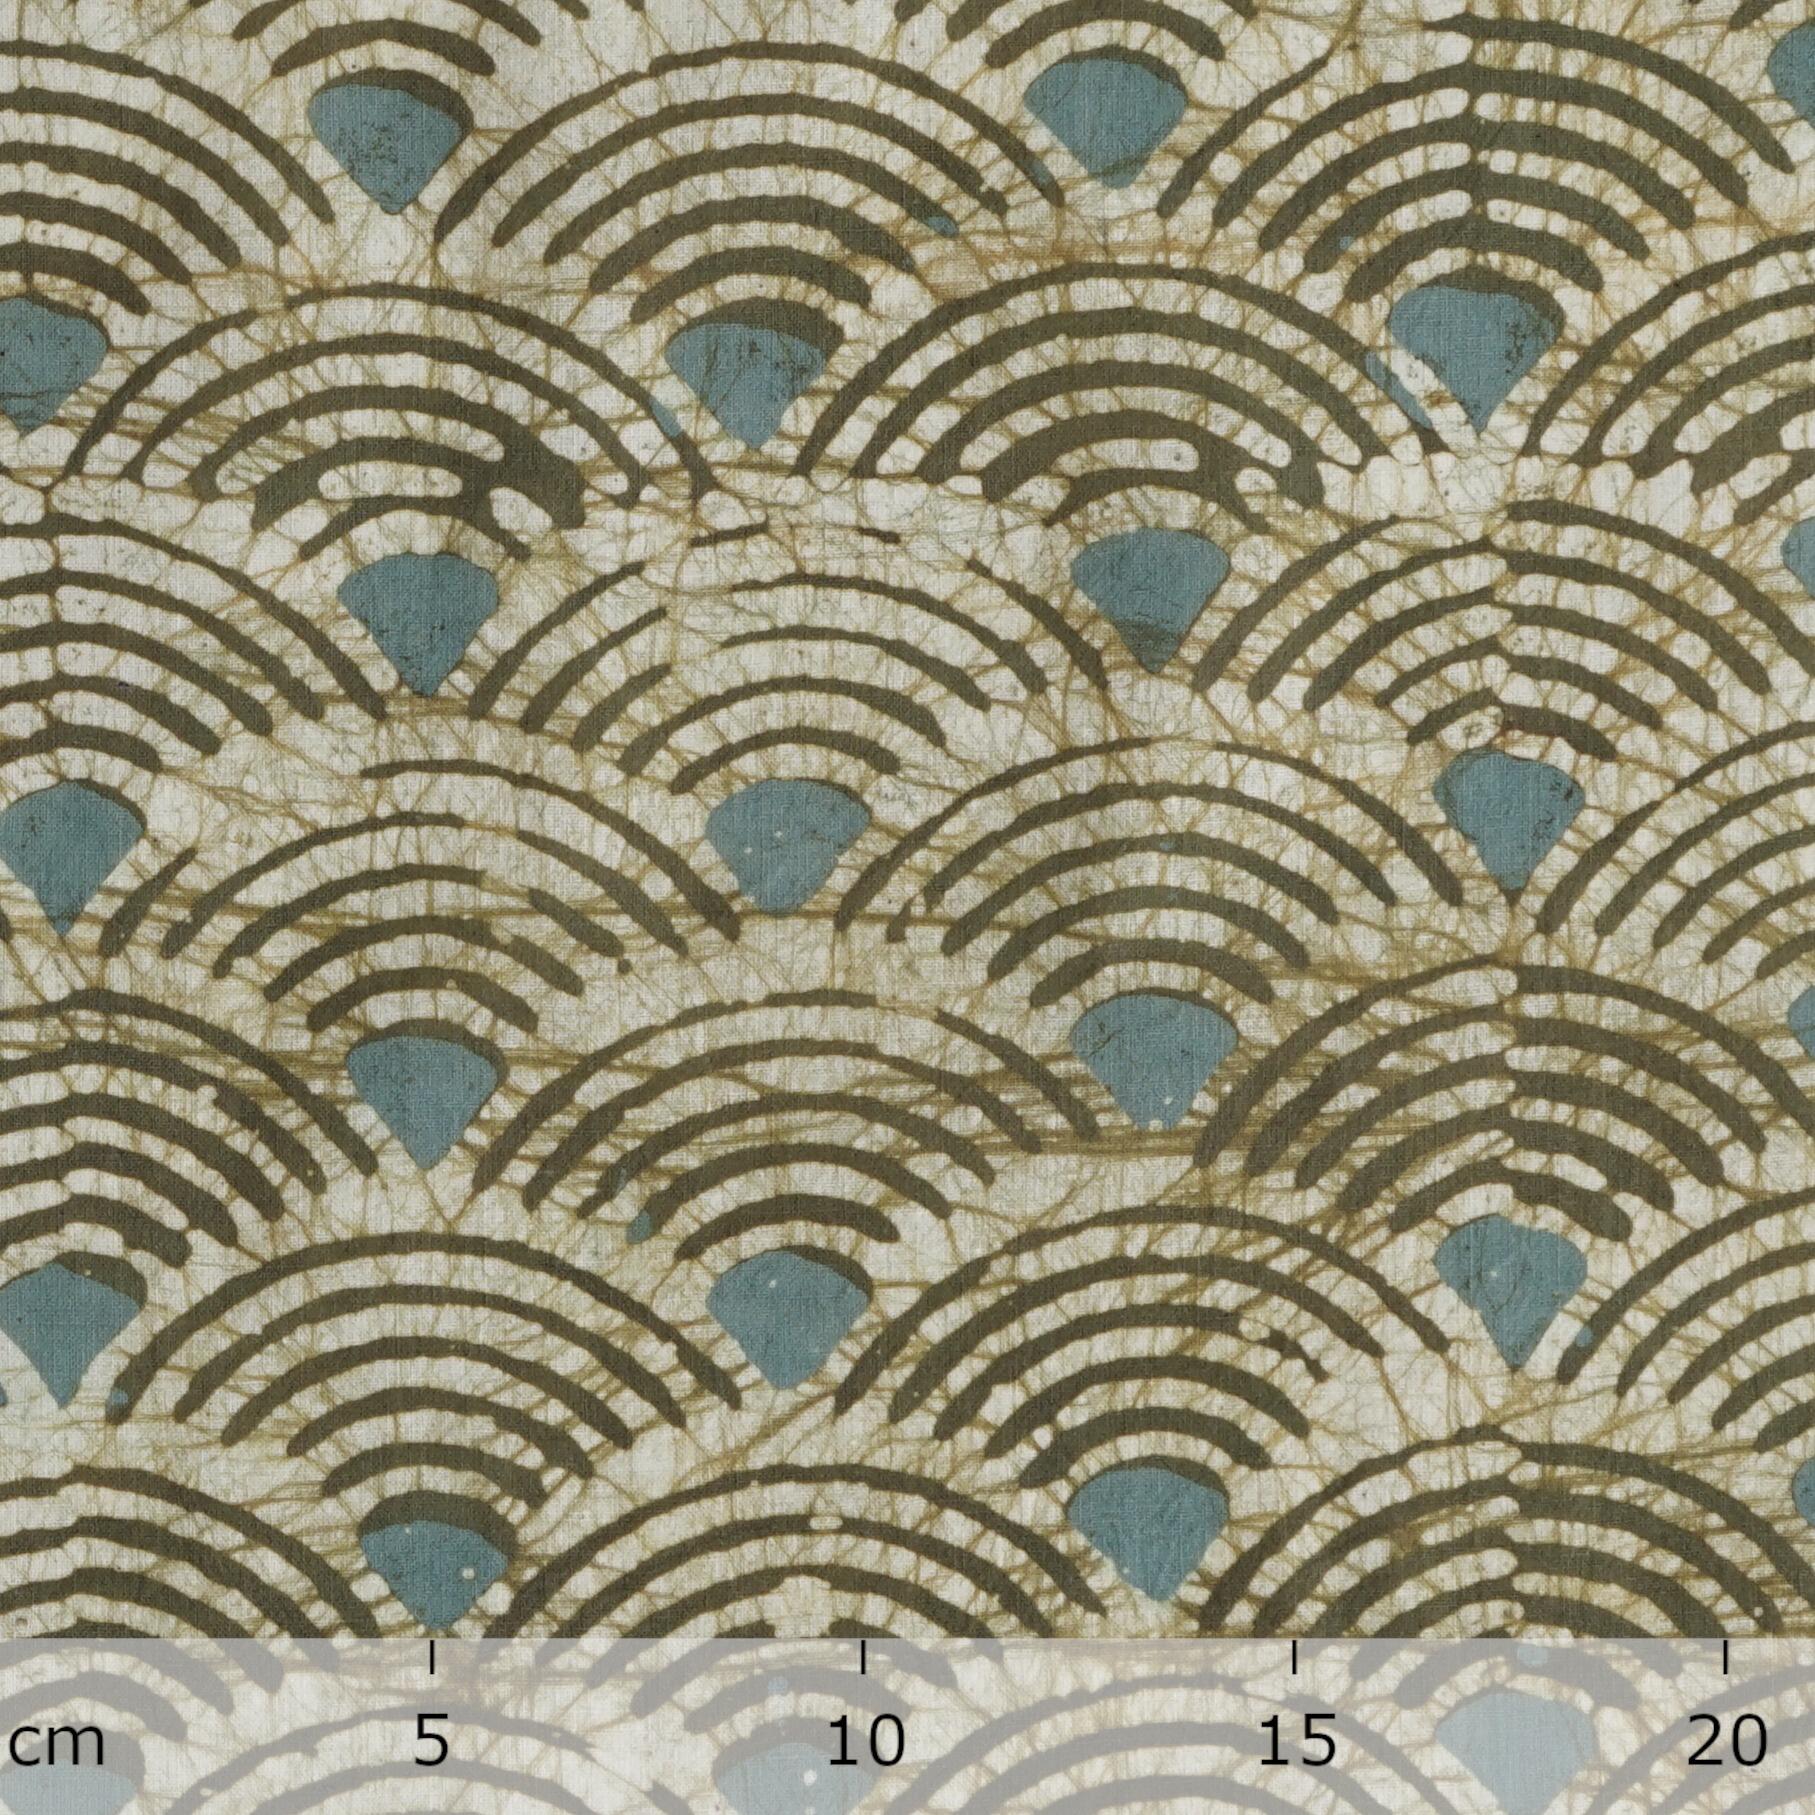 Block-Printed Batik Fabric - Cotton Cloth - Reactive Dyes - Connected Design - Ruler